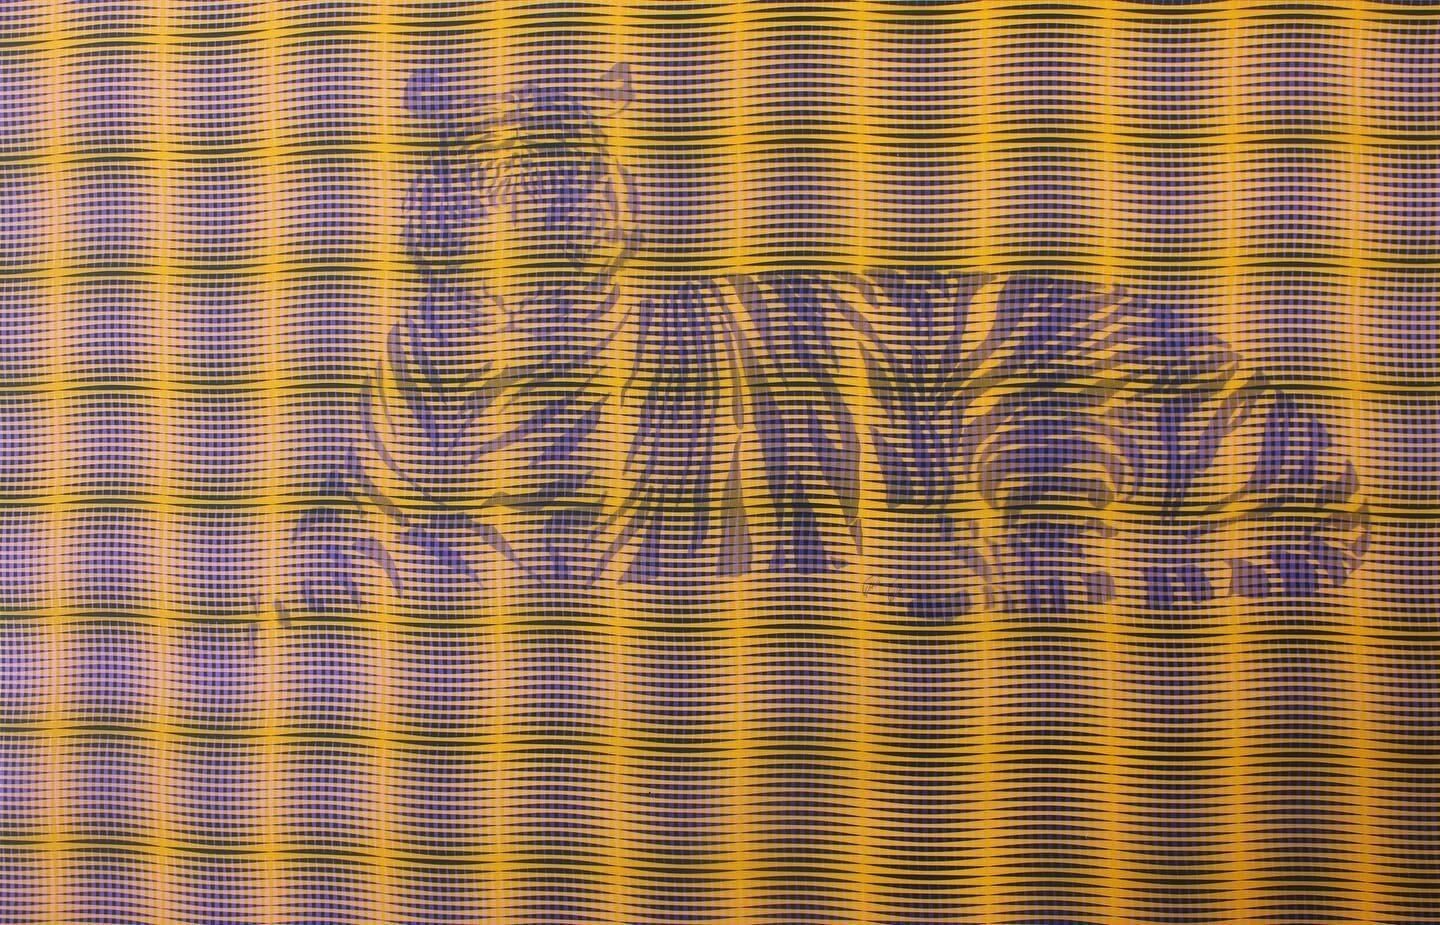 Inaugural Exhibition closing Today, Sunday, January 8, 2023 2pm-5pm

Nancy Buchanan
&ldquo;Bengal Tiger&rdquo;
2019
Ink on paper
16&rdquo; x 22.5&rdquo;
Courtesy of the artist and Charlie James Gallery

#art #contemporaryart #artist #artlosangeles #c